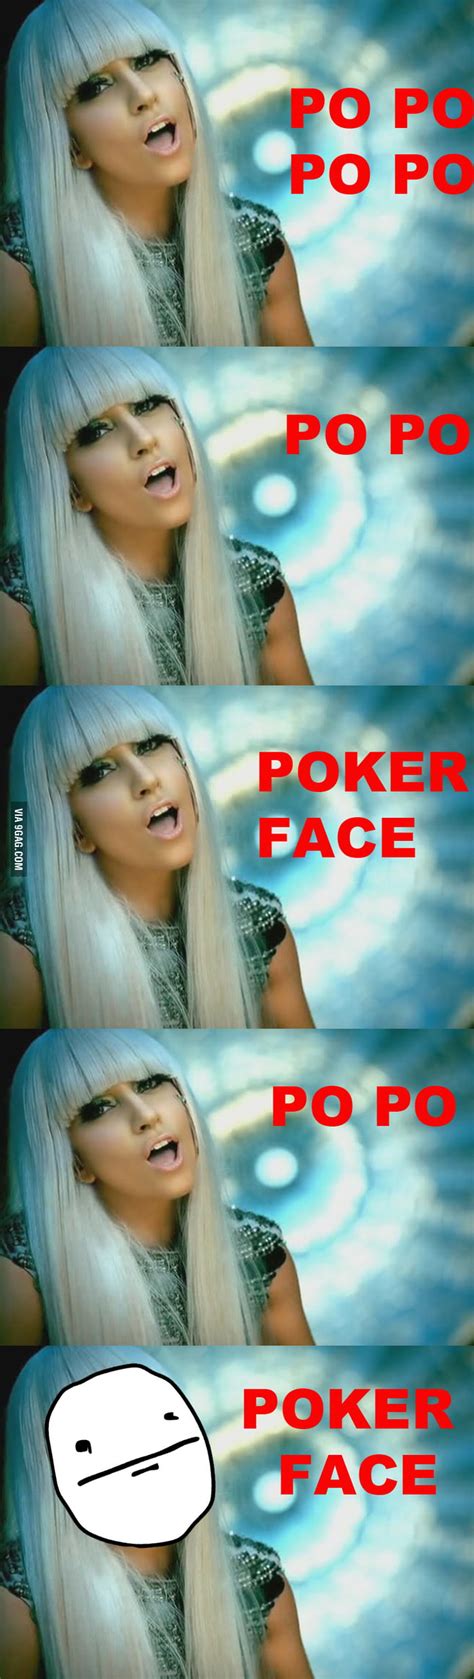 Po Poker Face